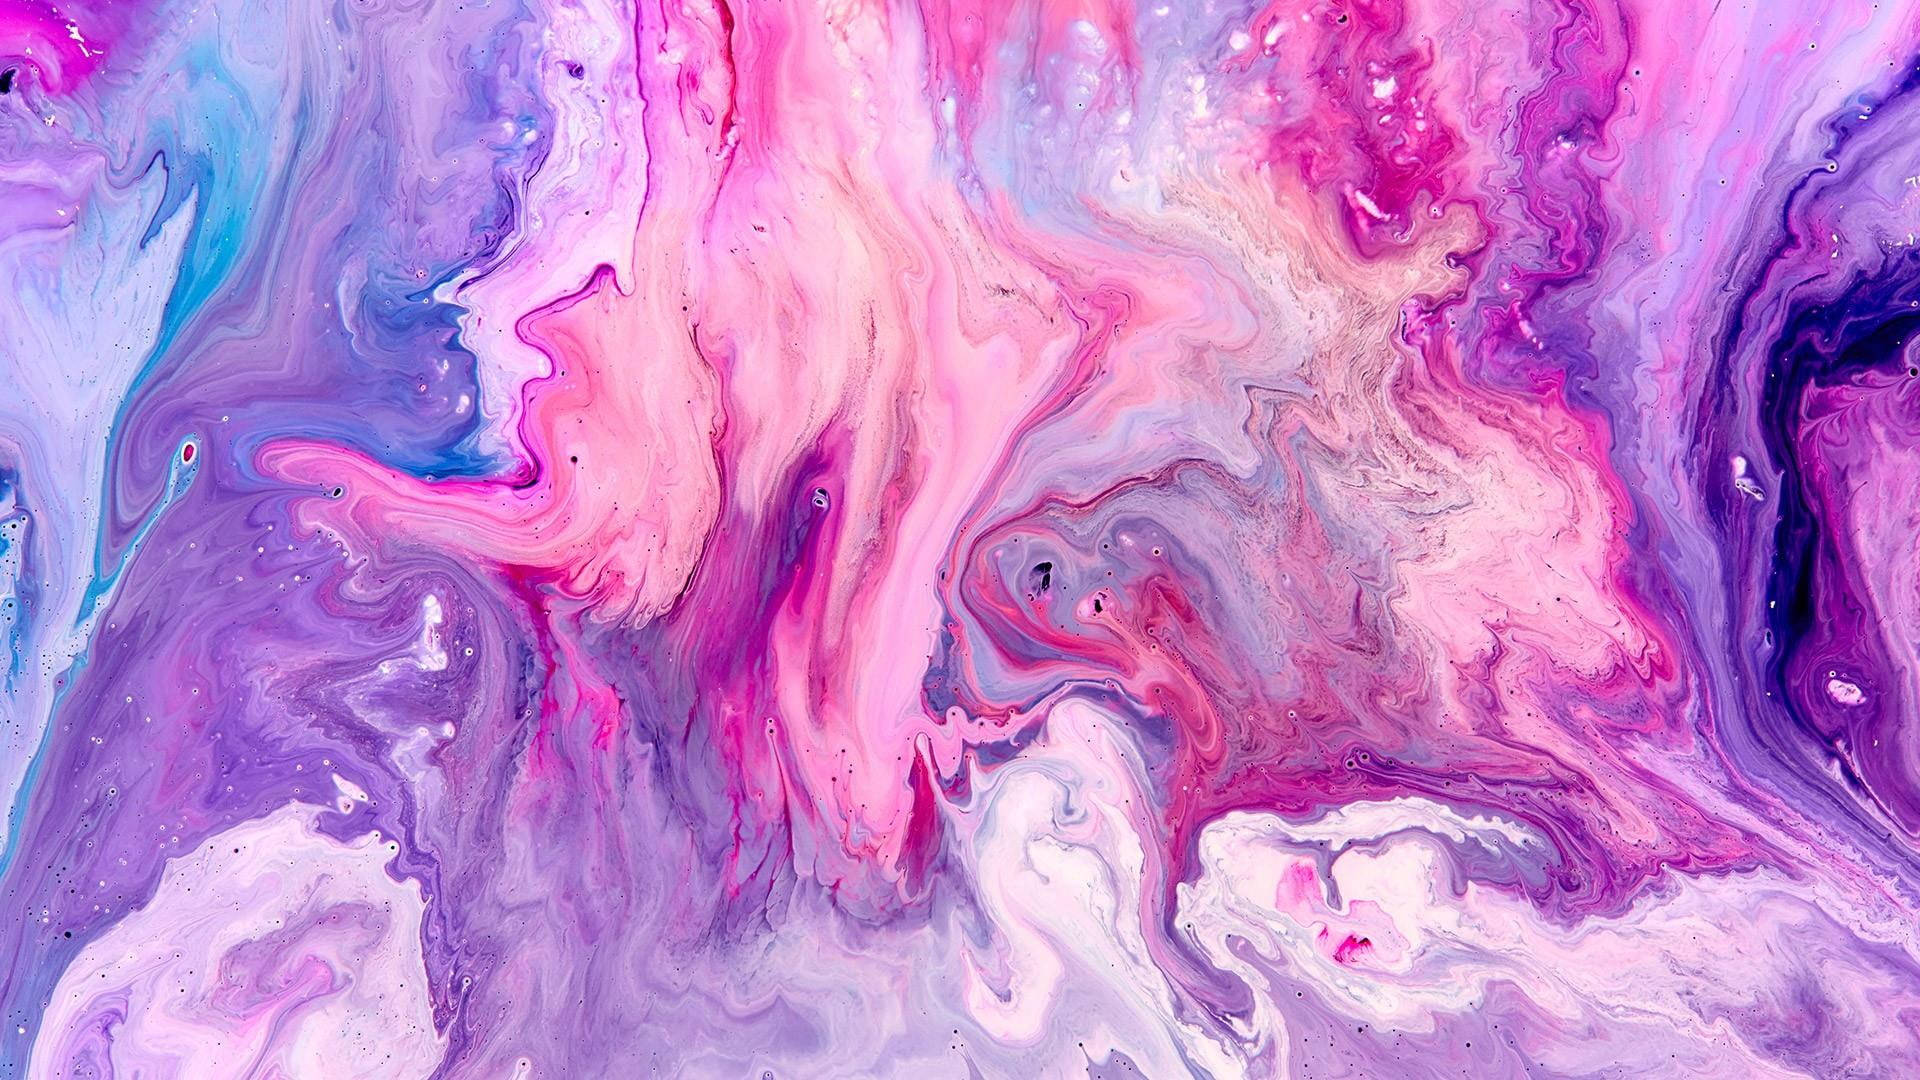 Purpleund Rosa Farben Als Hintergrundbild / Wallpaper. Wallpaper